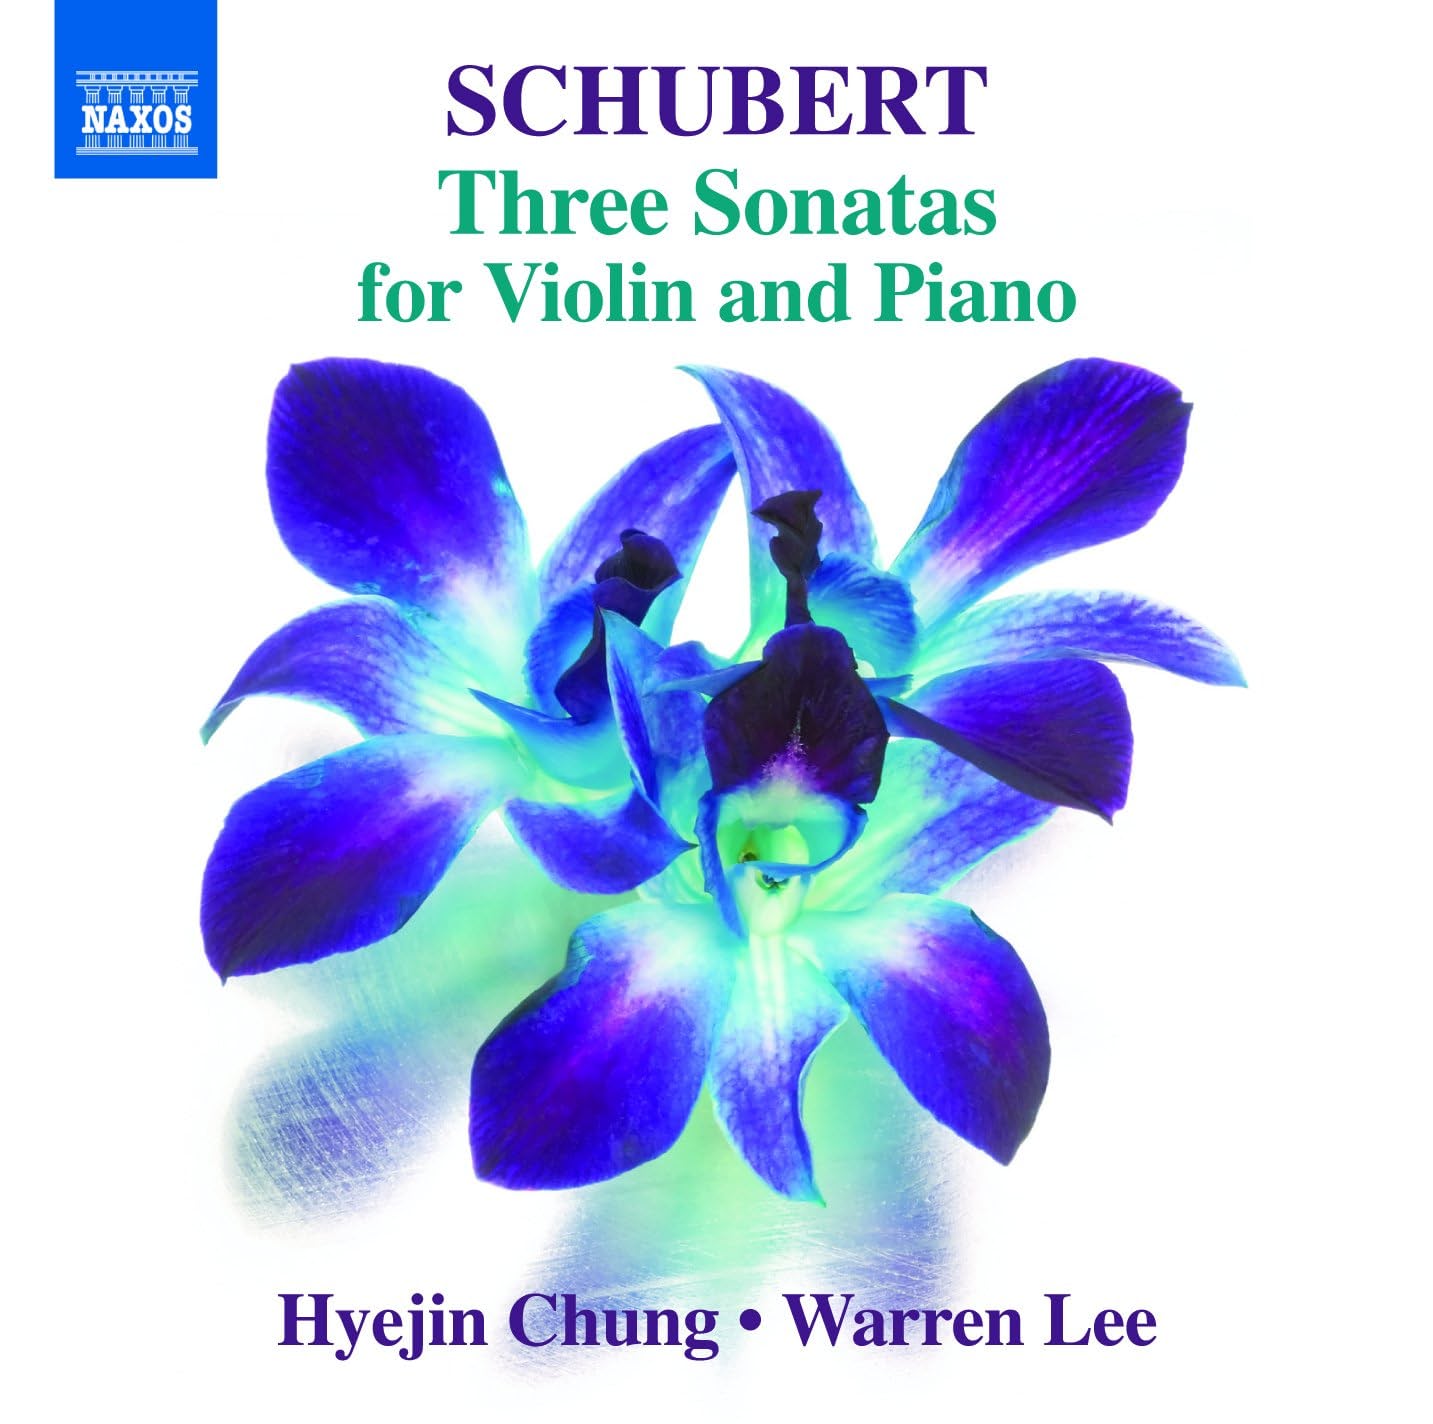 Schubert: 3 Violin Sonatas by Hyejin Chung & Warren Lee (CD)